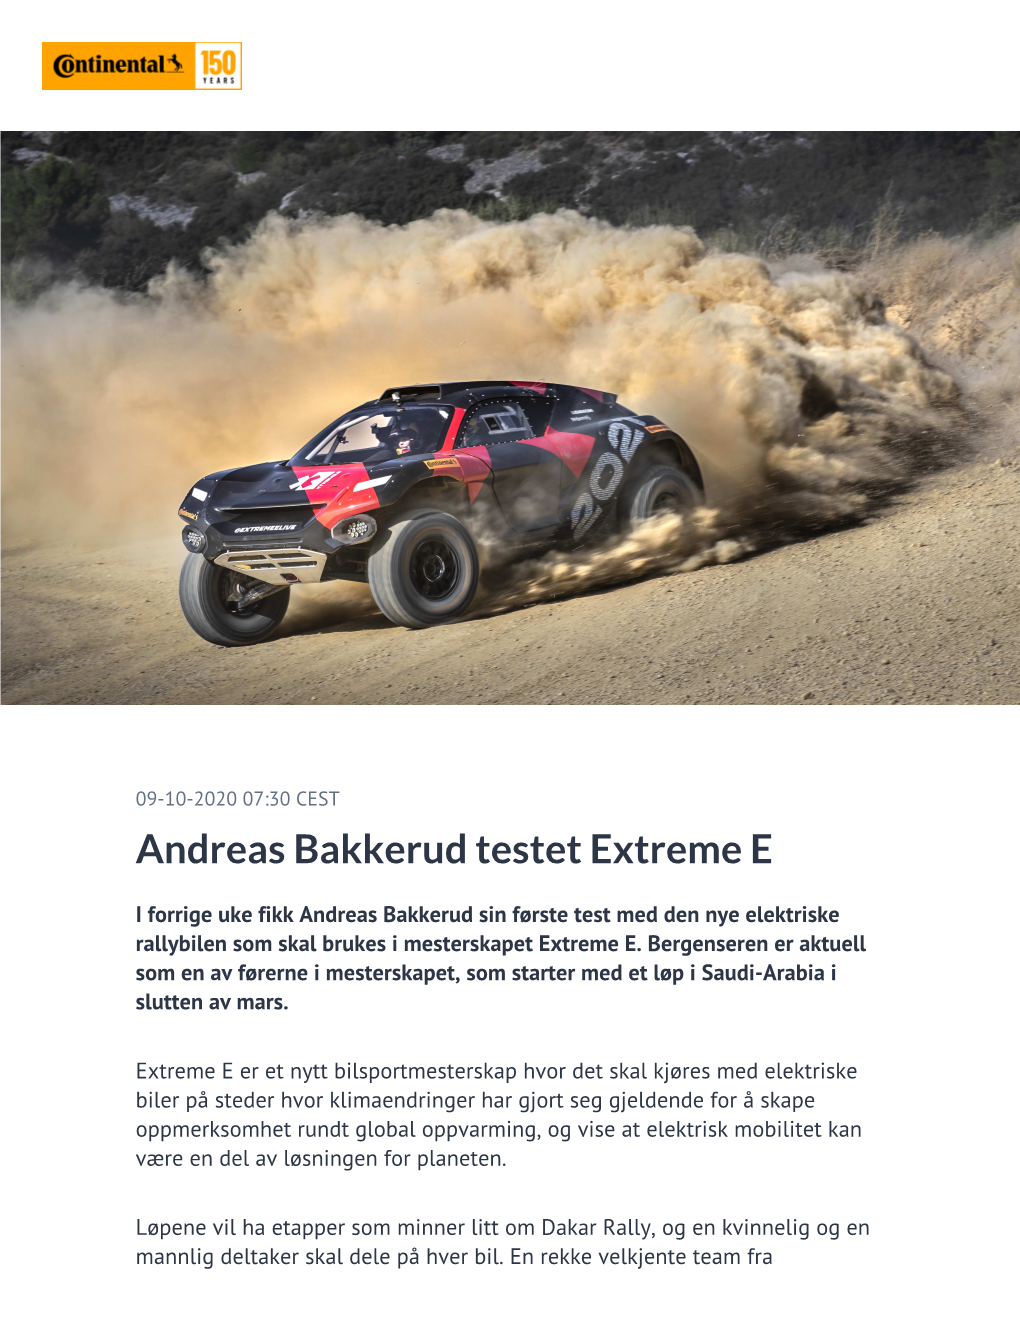 Andreas Bakkerud Testet Extreme E